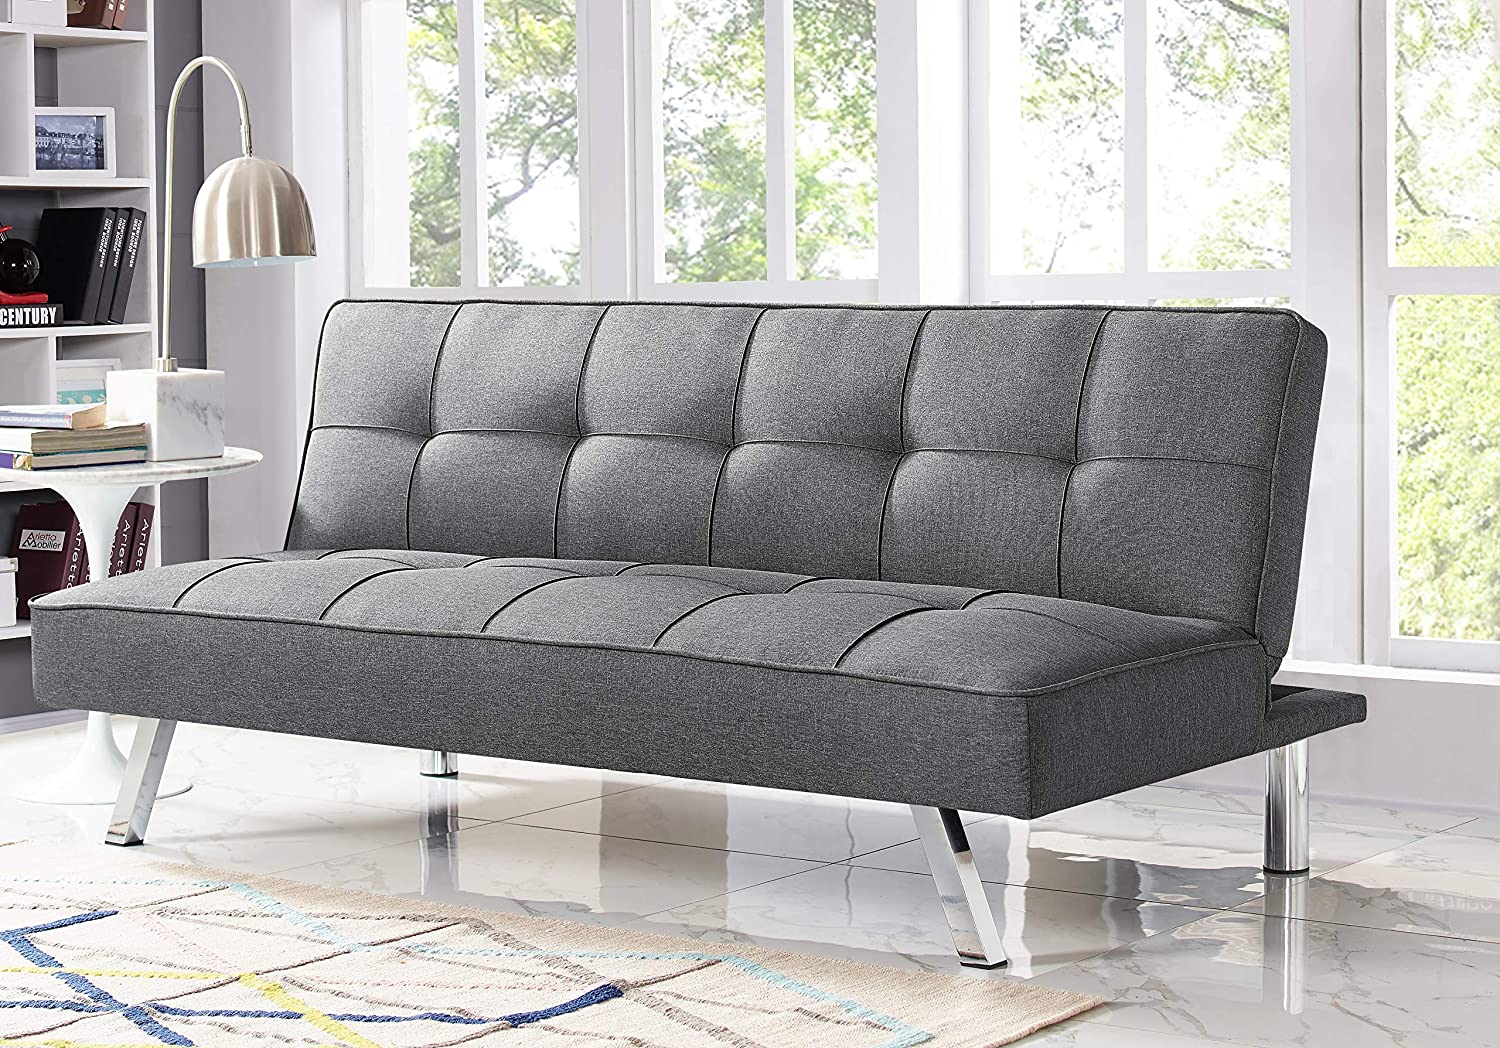 Serta Rane Convertible Sofa Couch